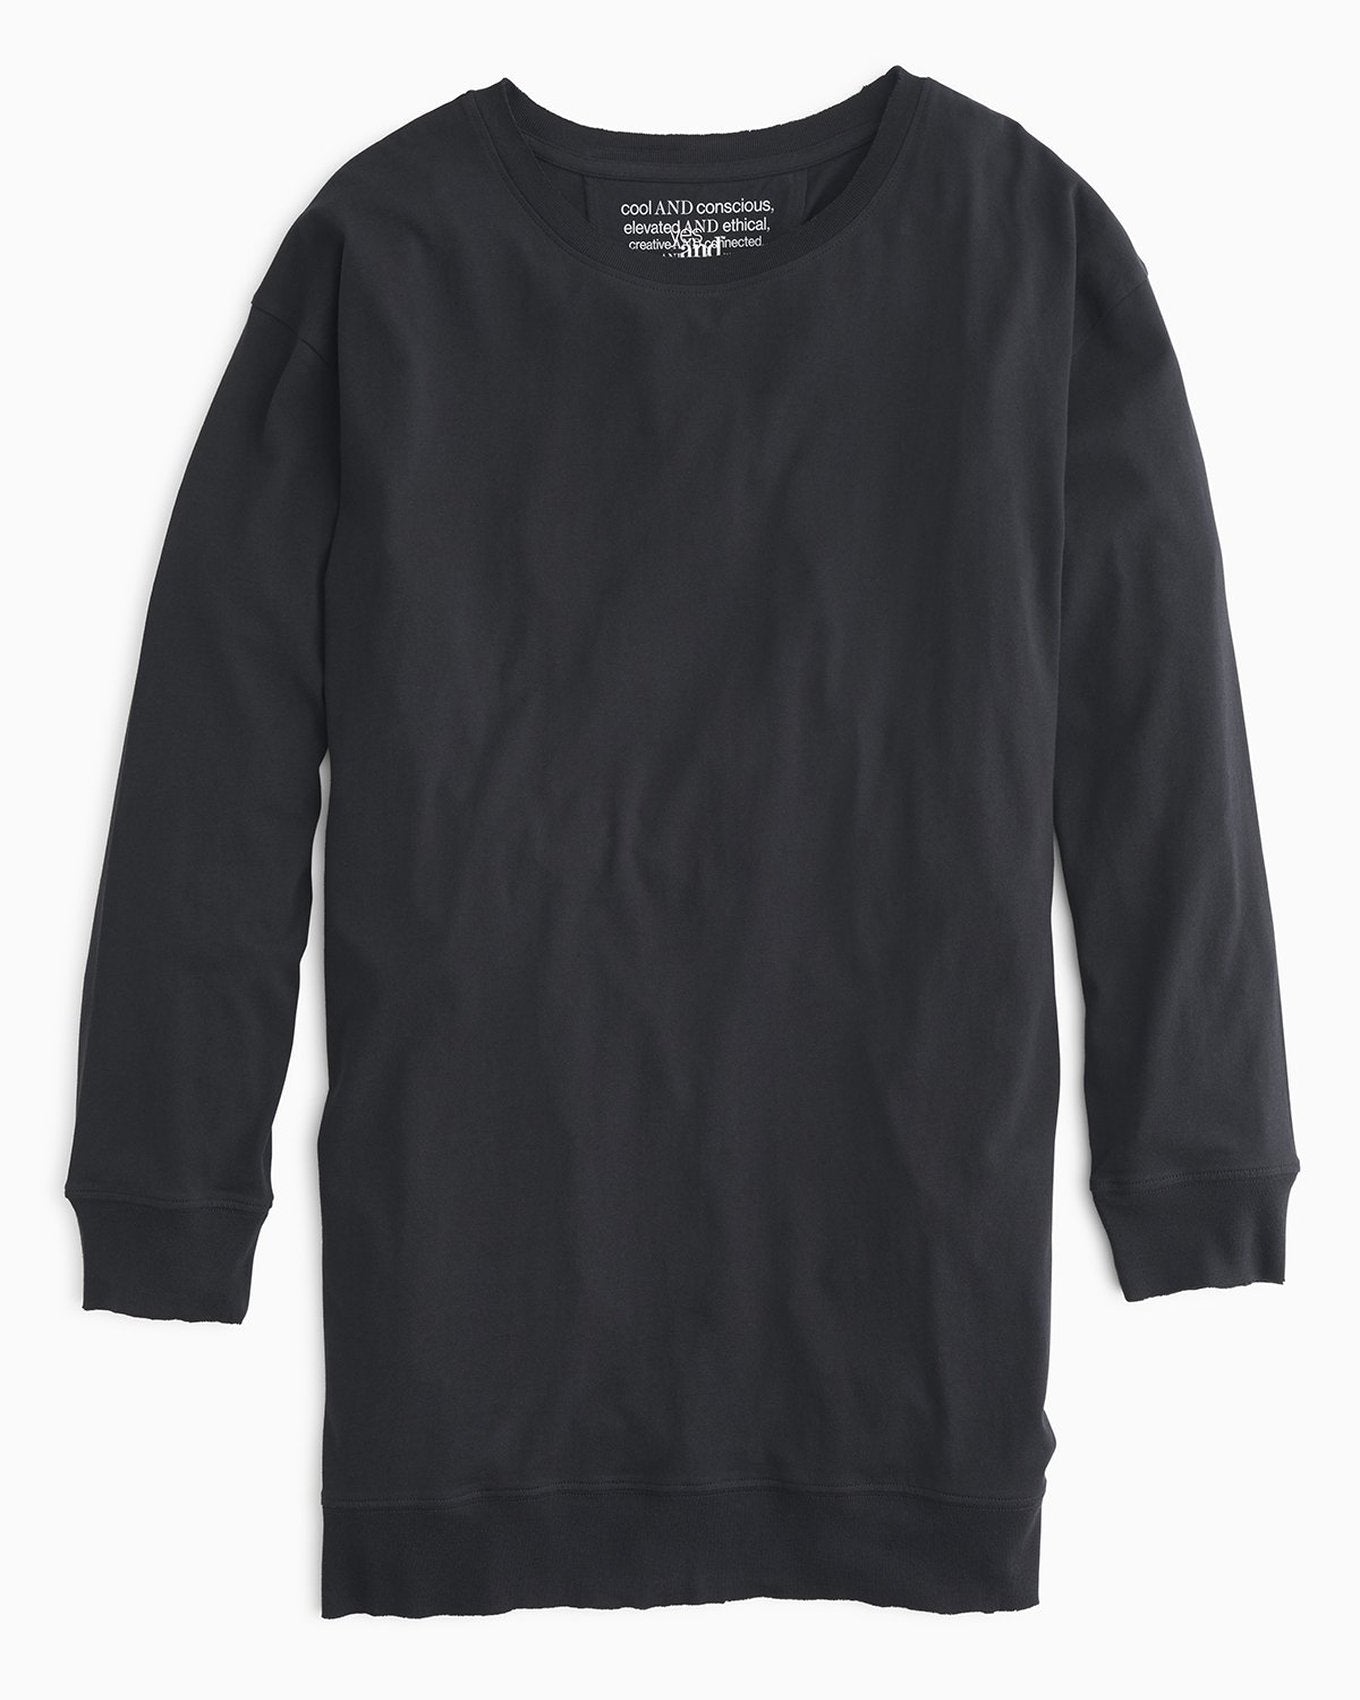 YesAnd Organic Long Sleeve Tee Shirt Dress Tee Shirt Dress in color Jet Black and shape sheath